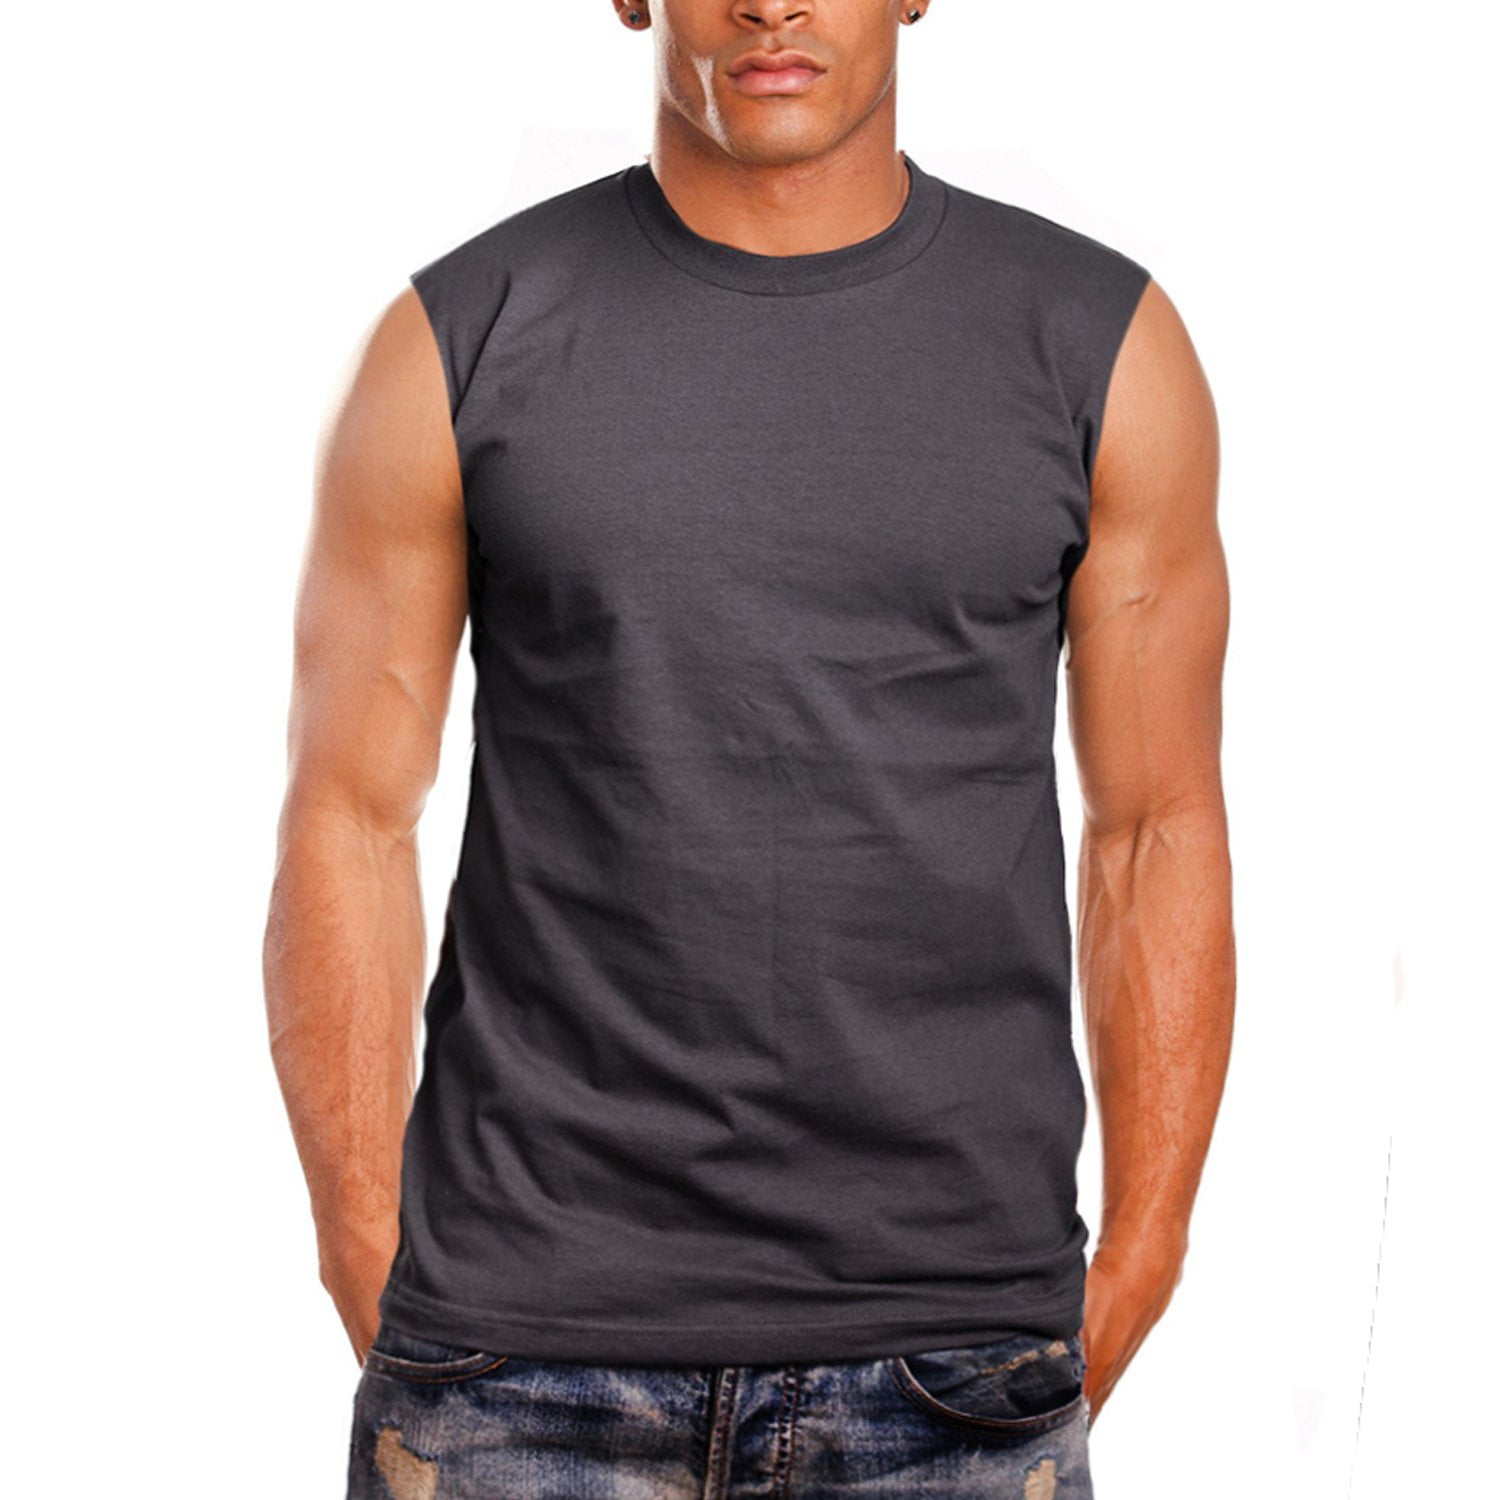 New Mens Vest Plain Sleeveless T Shirt Athletic 100% Cotton Sports Gym Tank Top 